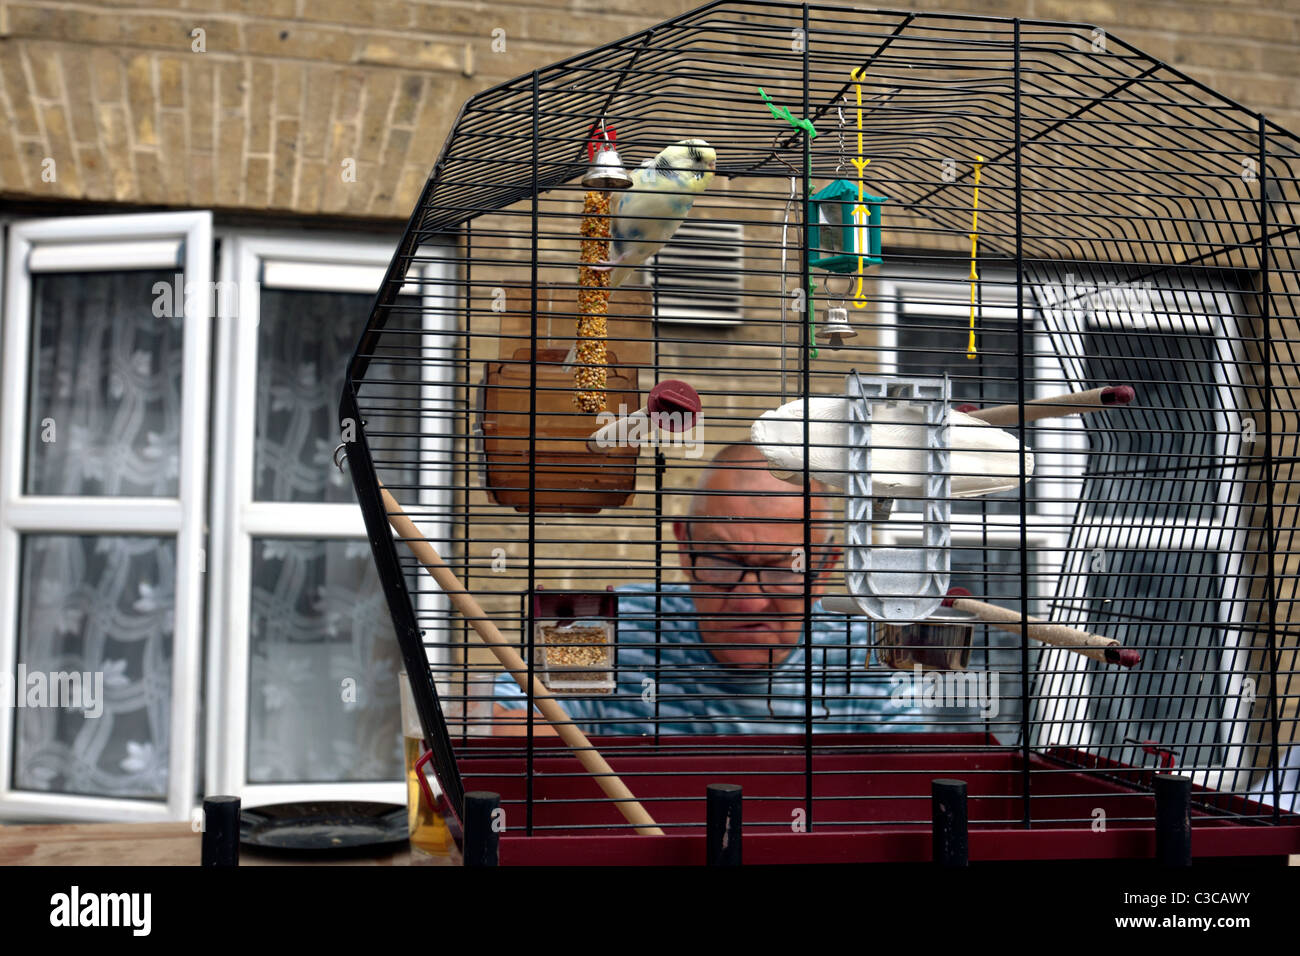 man with pet bird in london Stock Photo